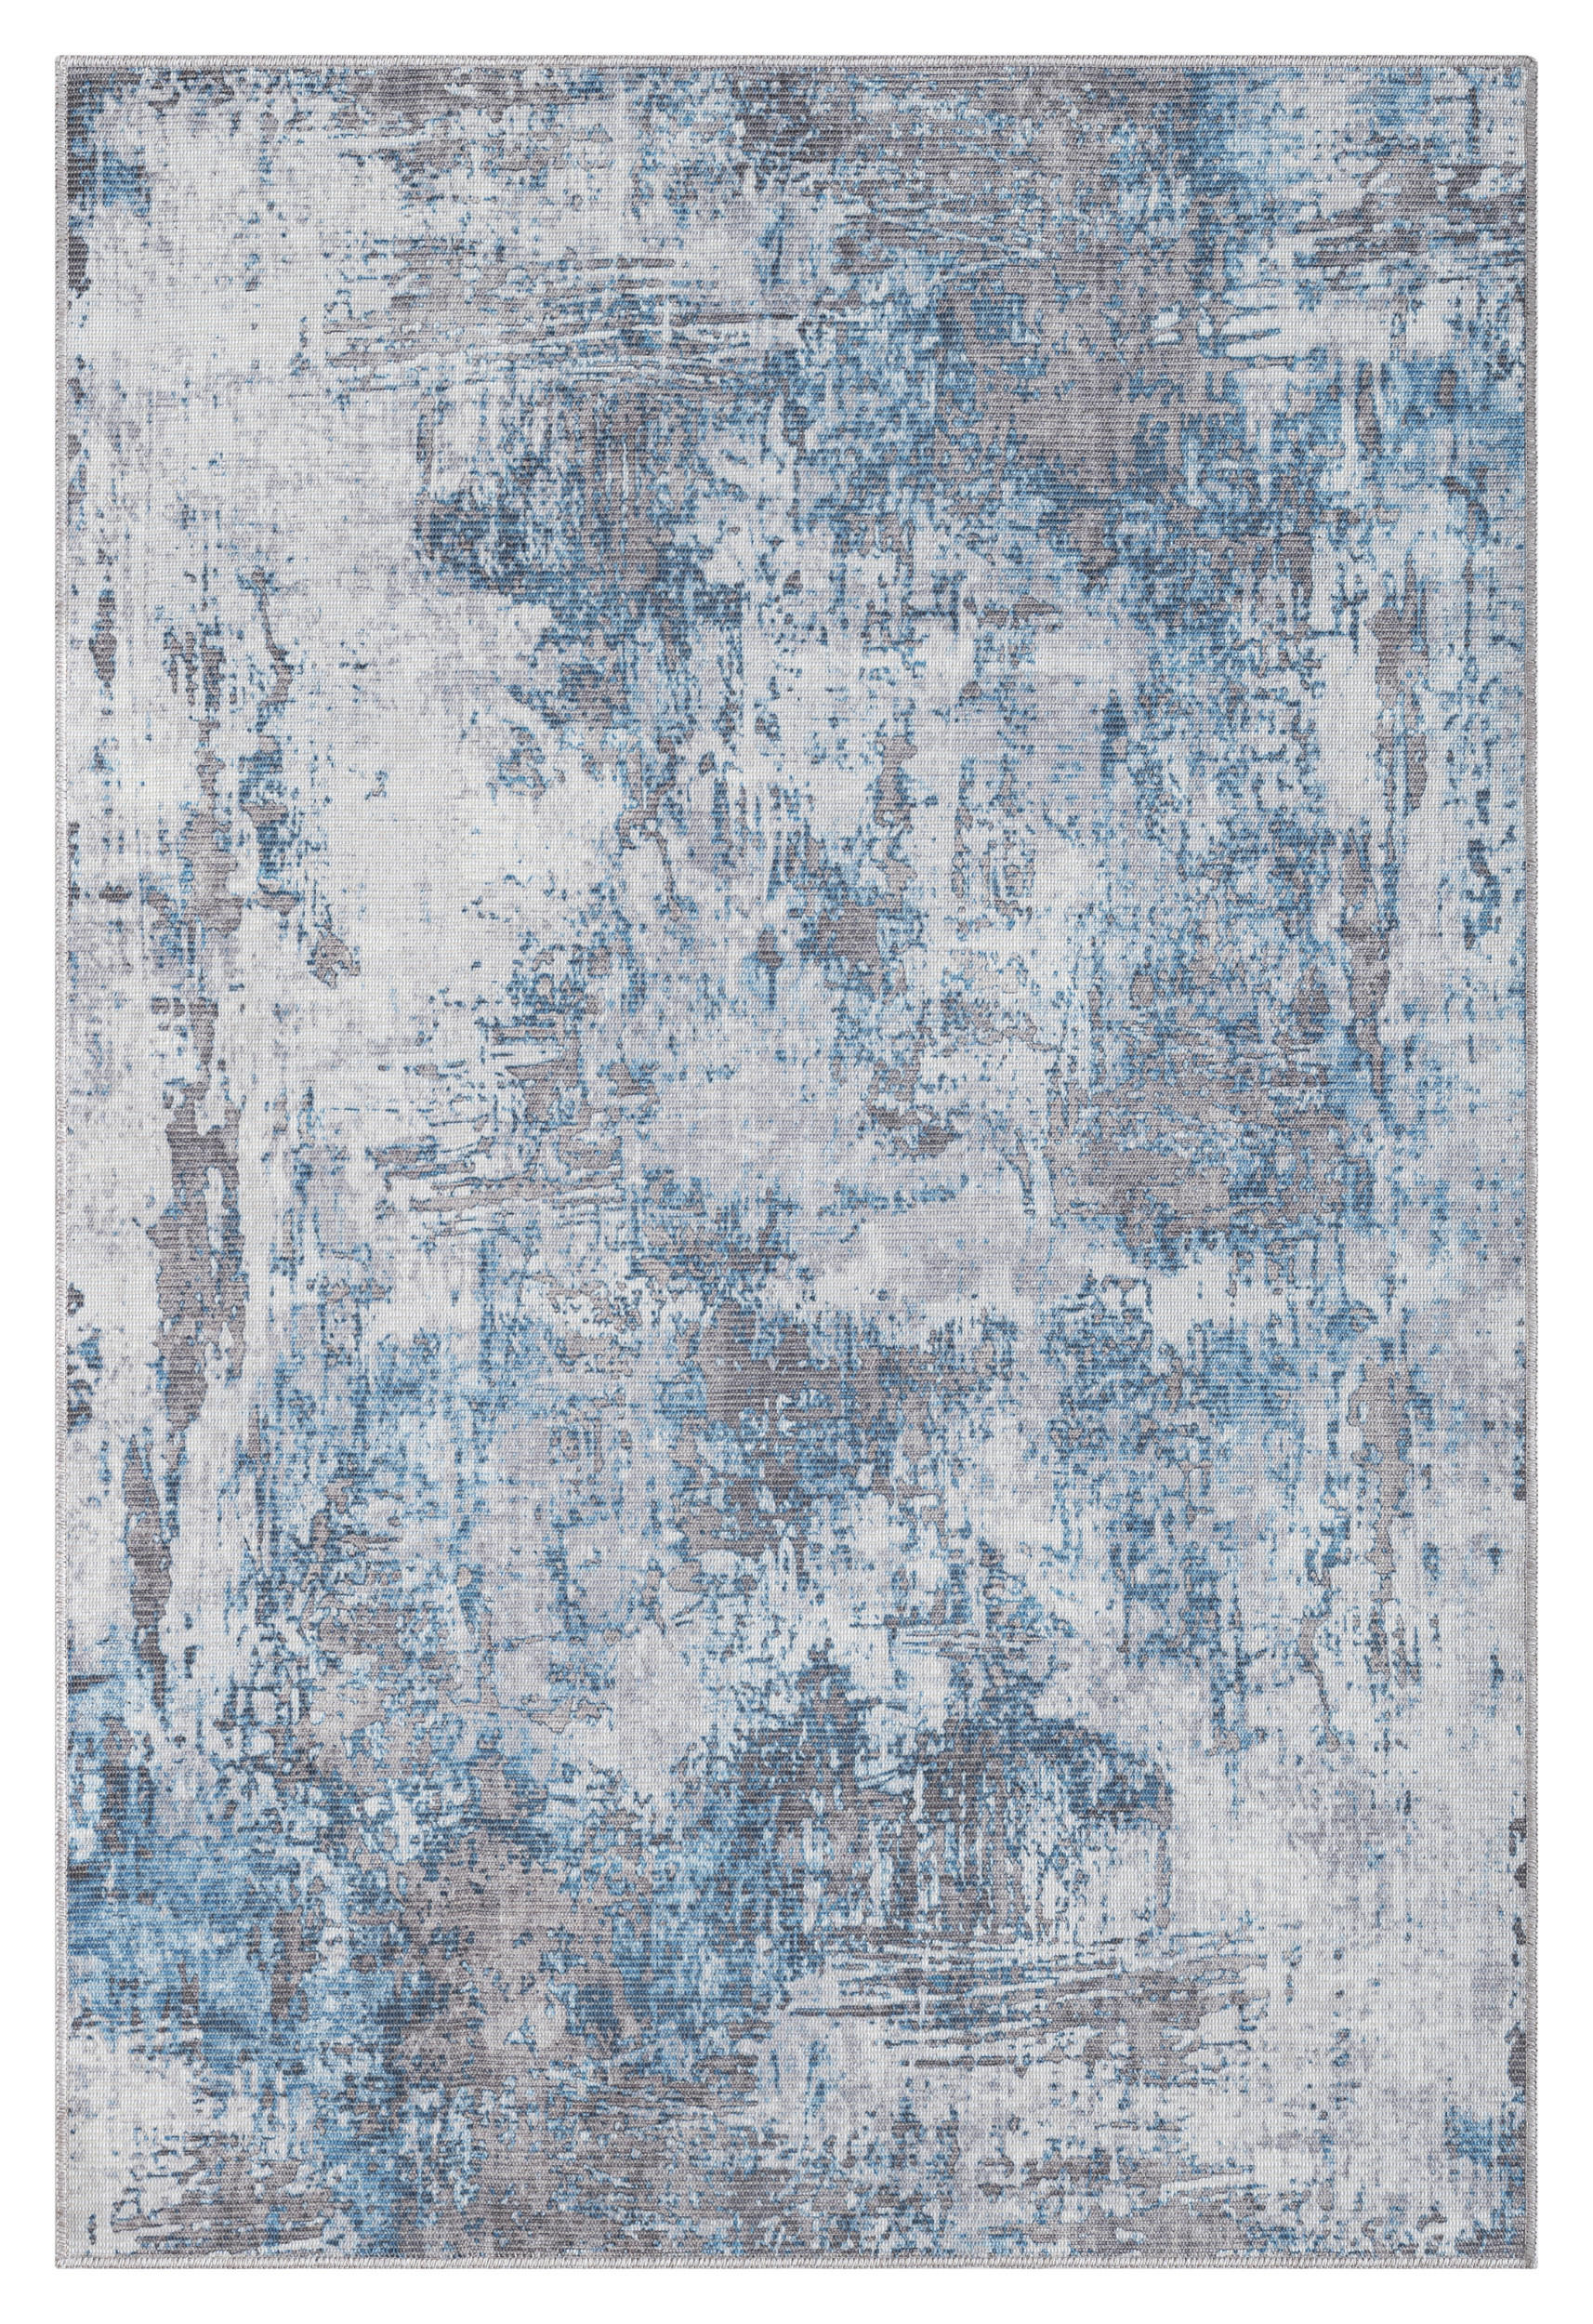 FLACHWEBETEPPICH  120/180 cm  Blau, Grau   - Blau/Grau, Basics, Textil (120/180cm)